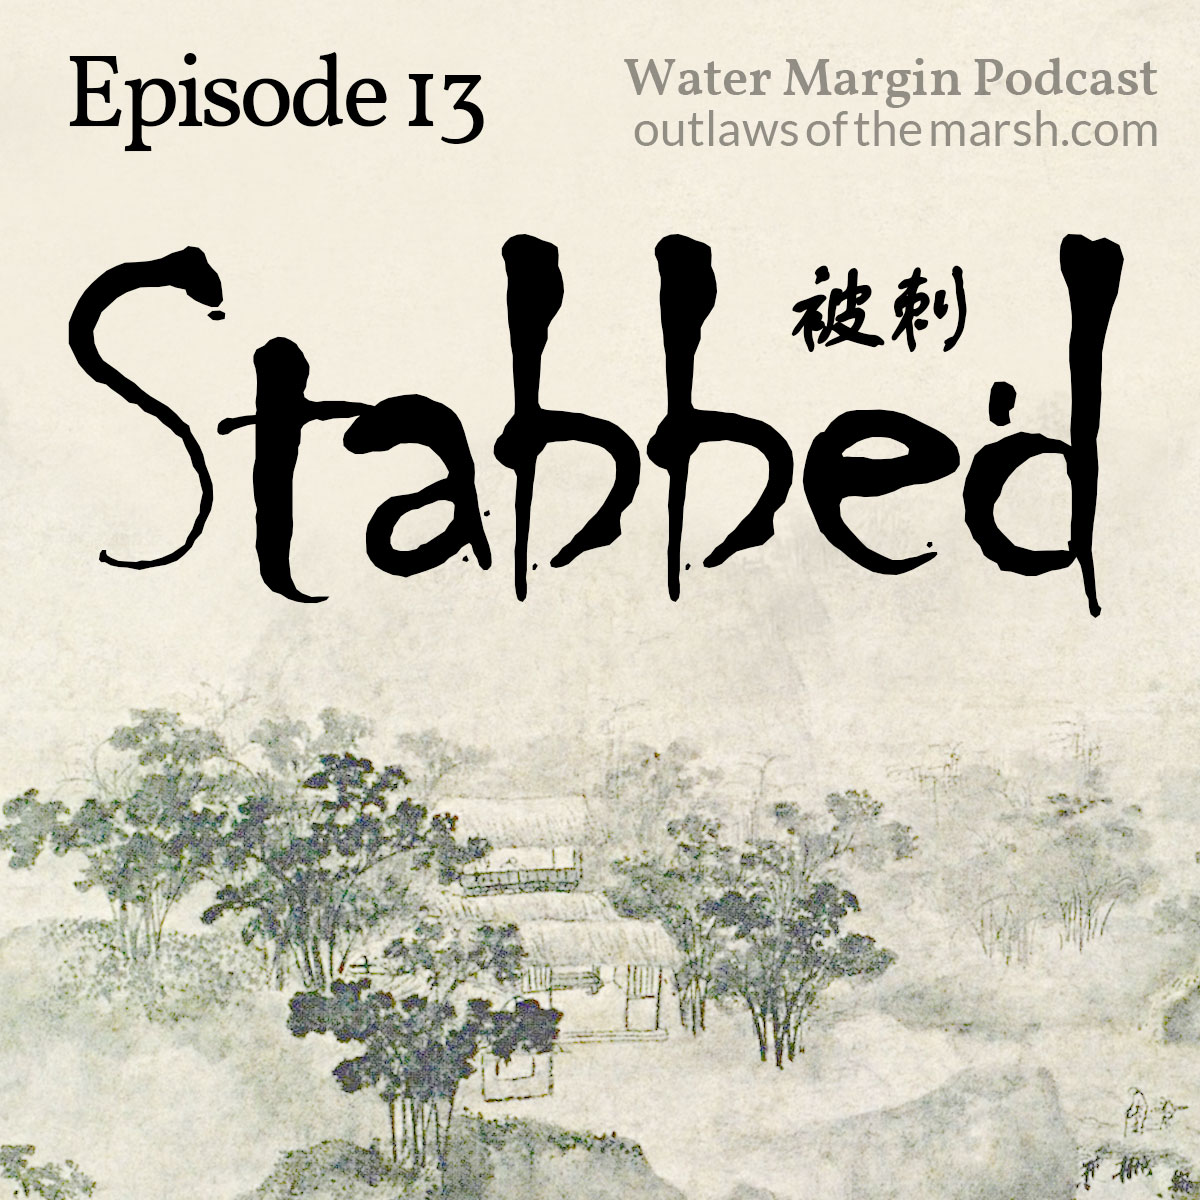 Water Margin Podcast: Episode 013